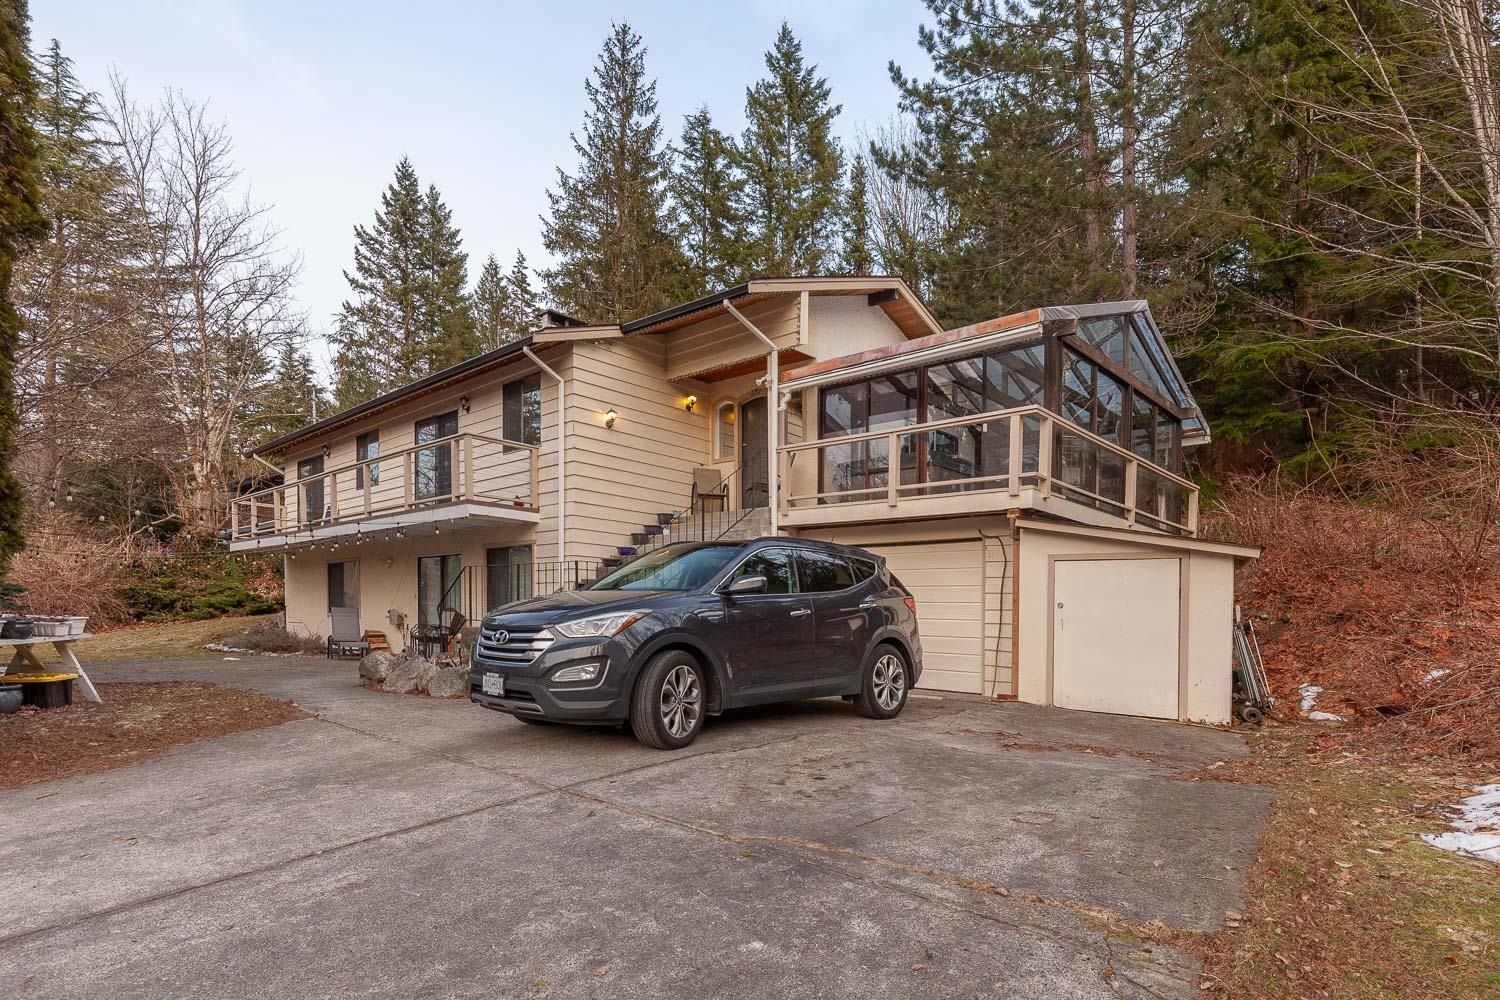 New property listed in Garibaldi Highlands, Squamish